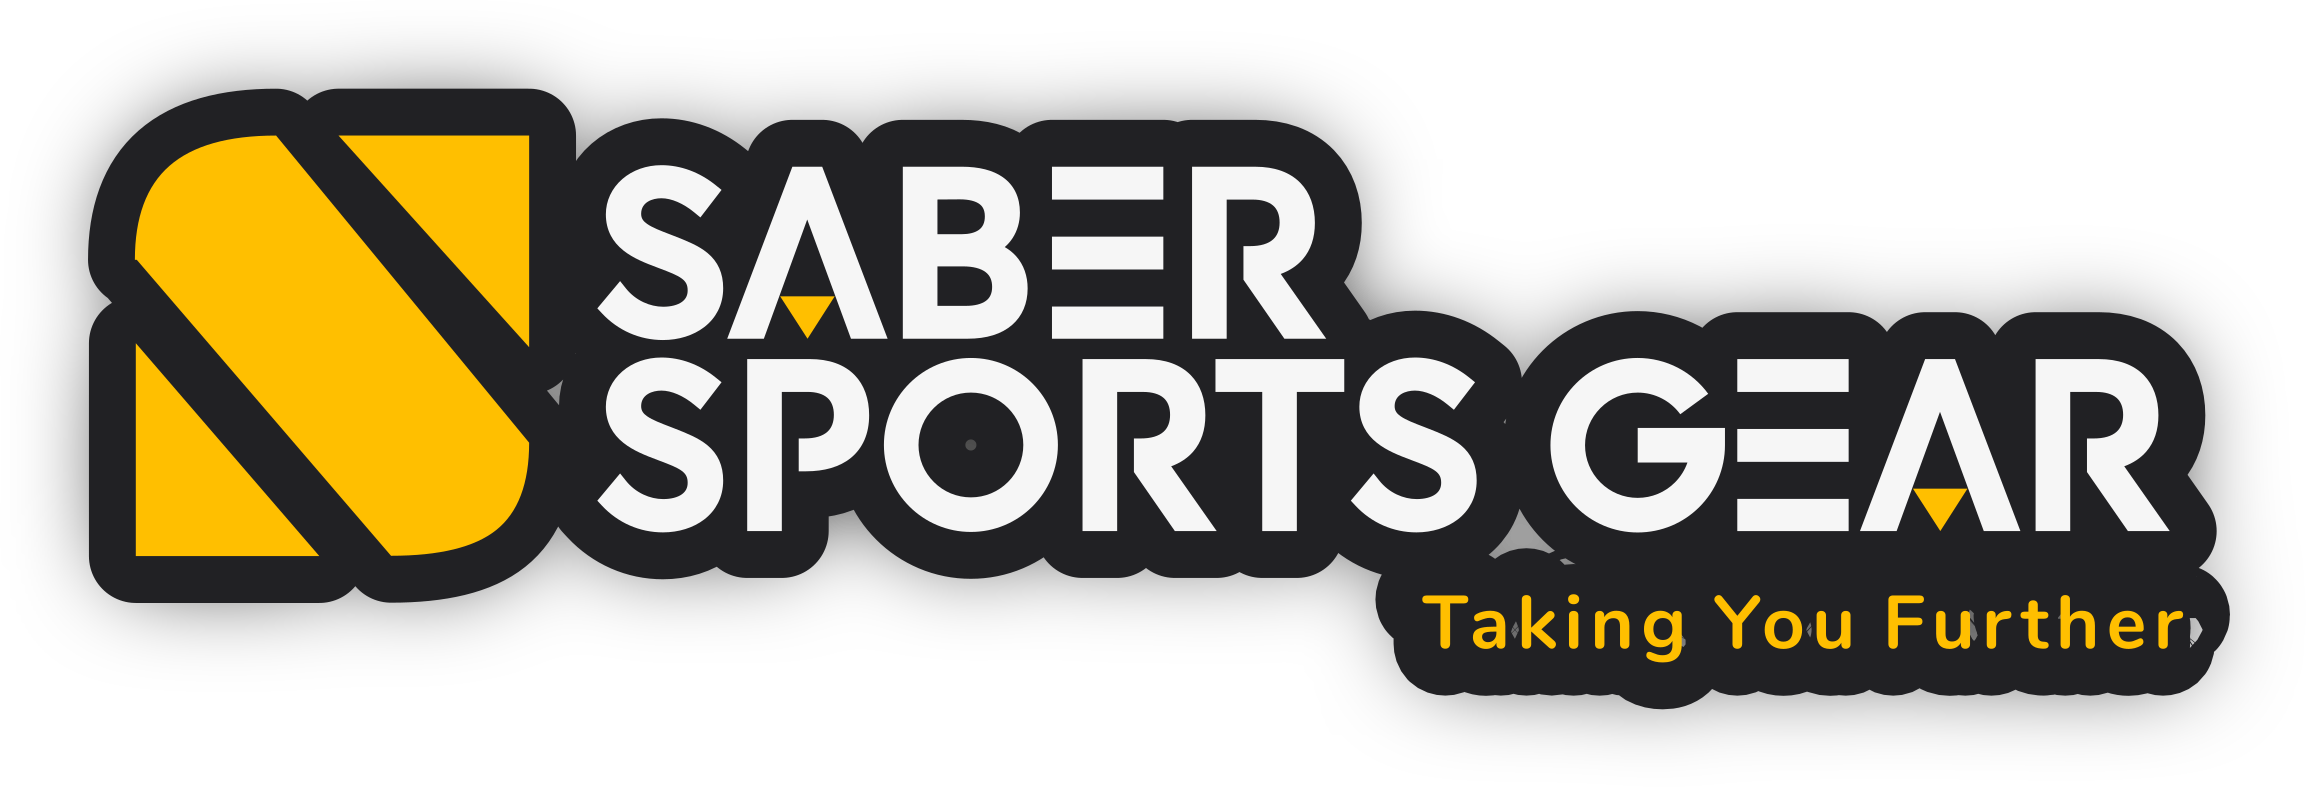 Saber Sports Gear